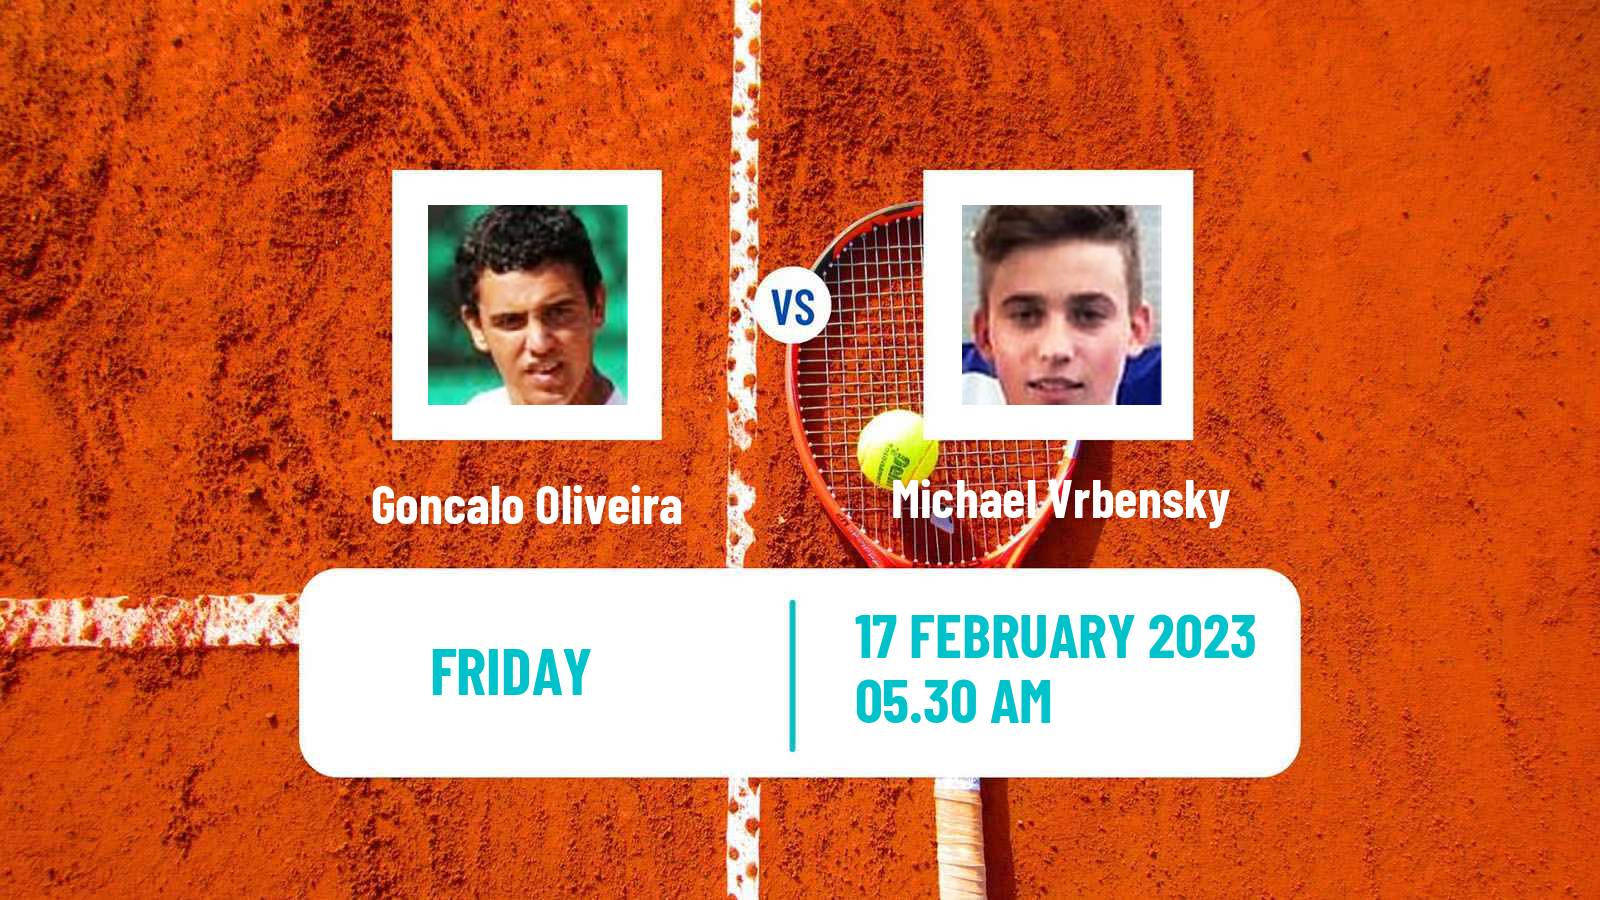 Tennis ITF Tournaments Goncalo Oliveira - Michael Vrbensky